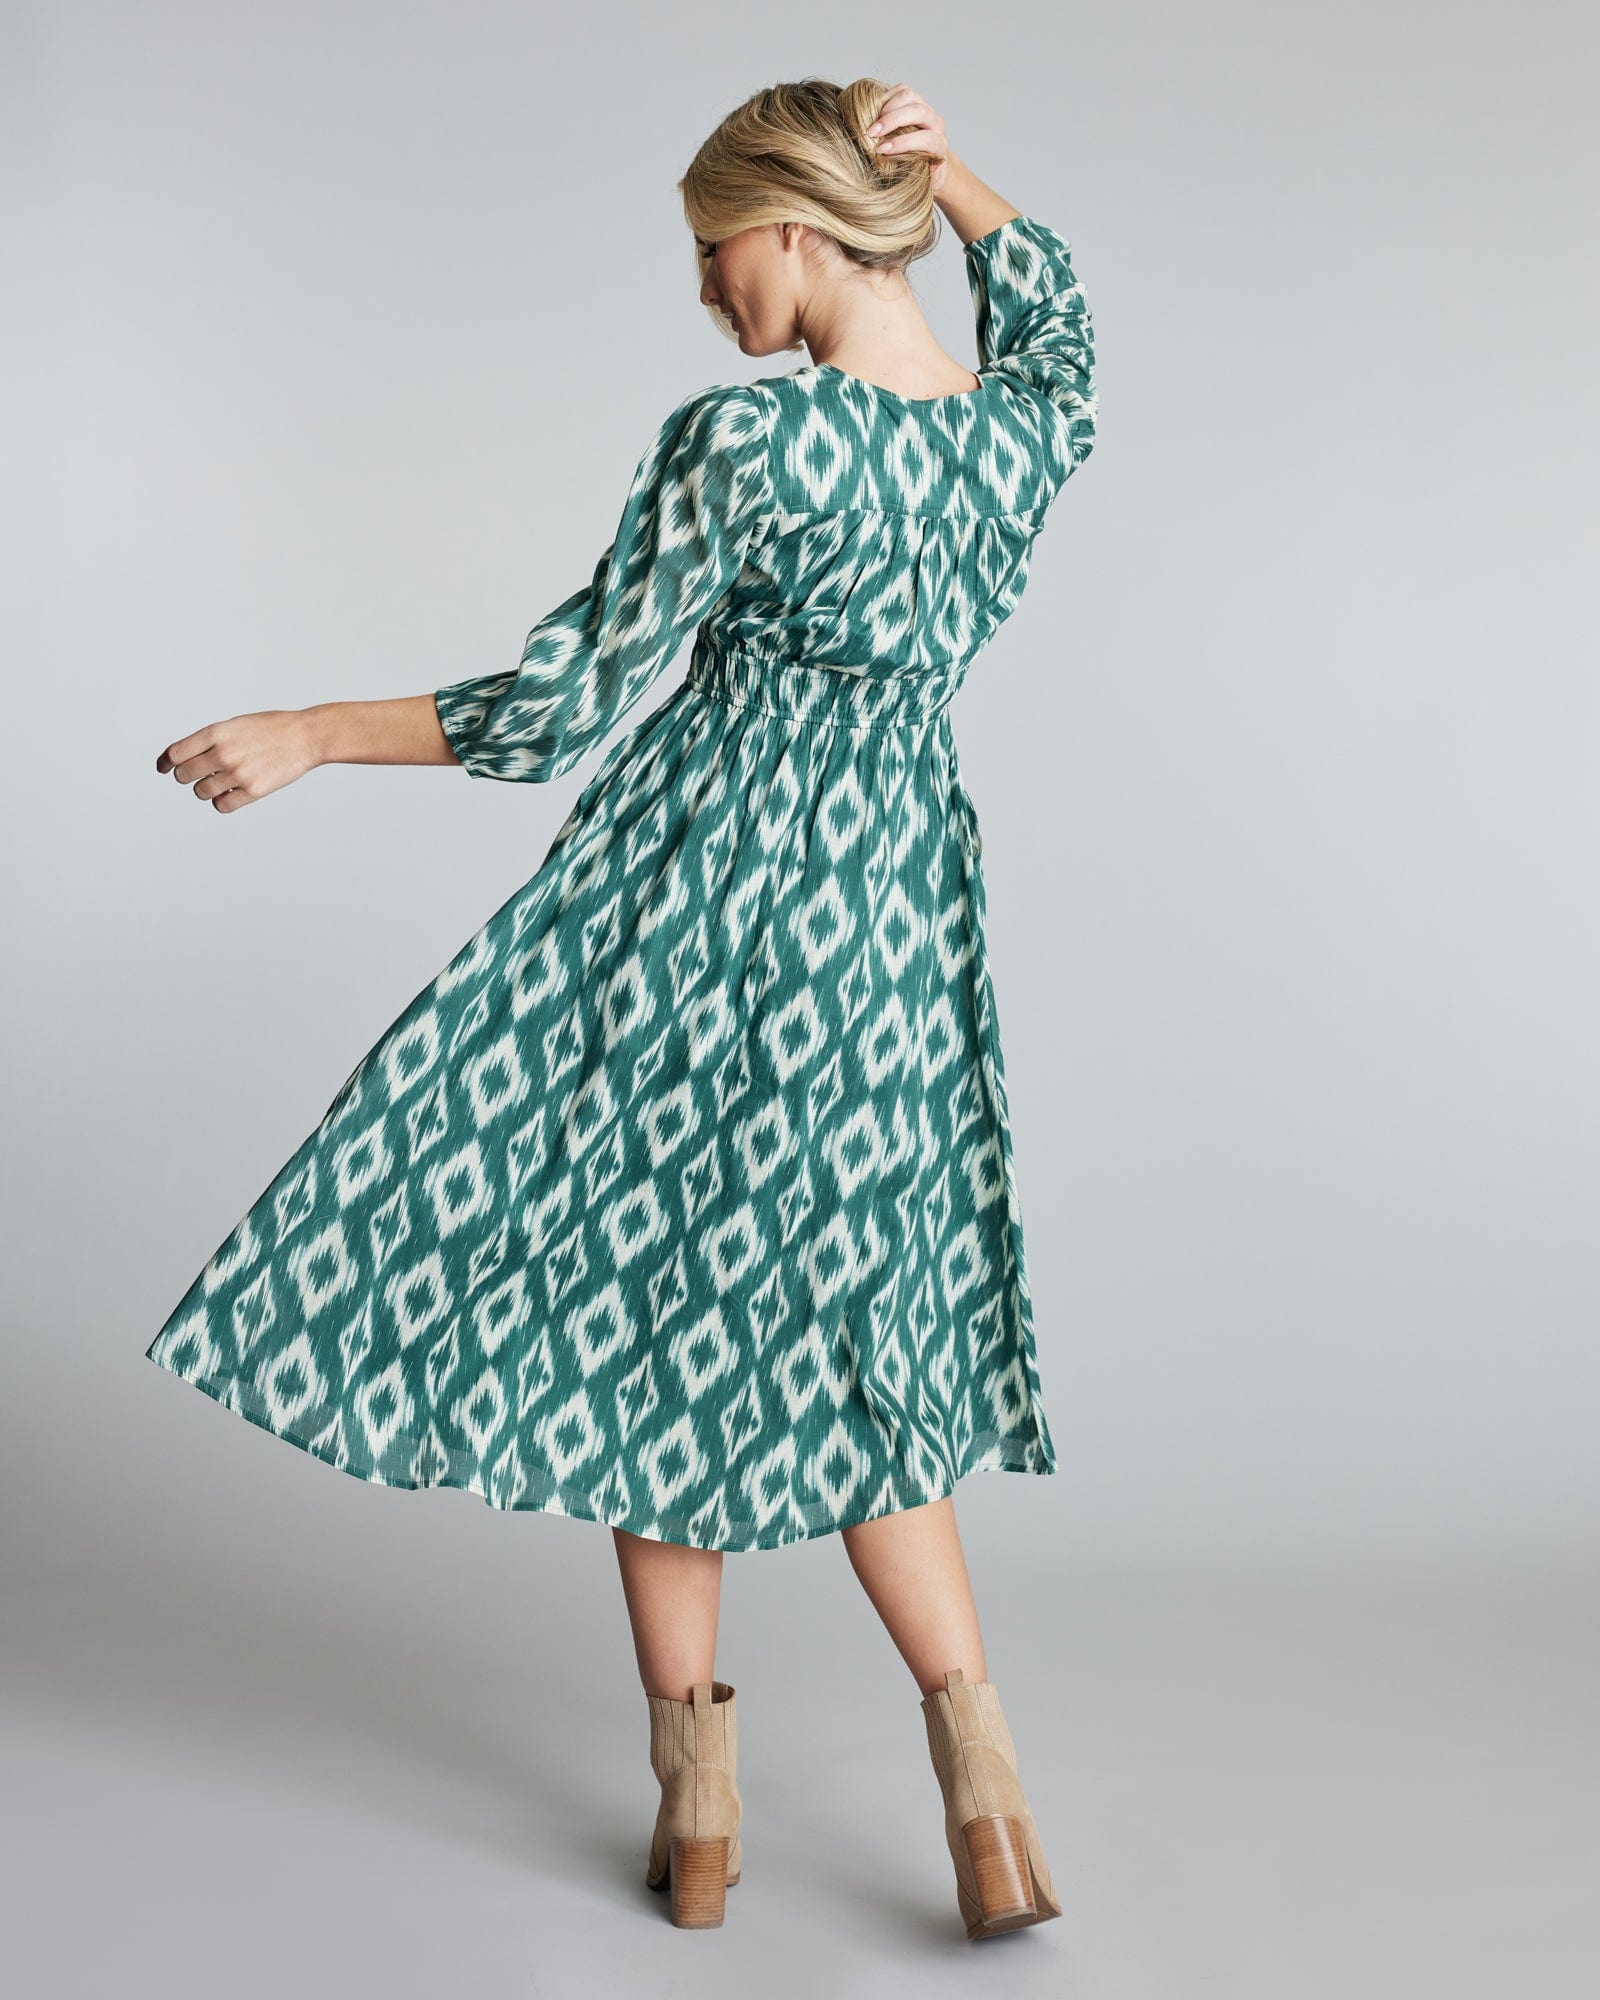 Woman wearing a green geometric print dress